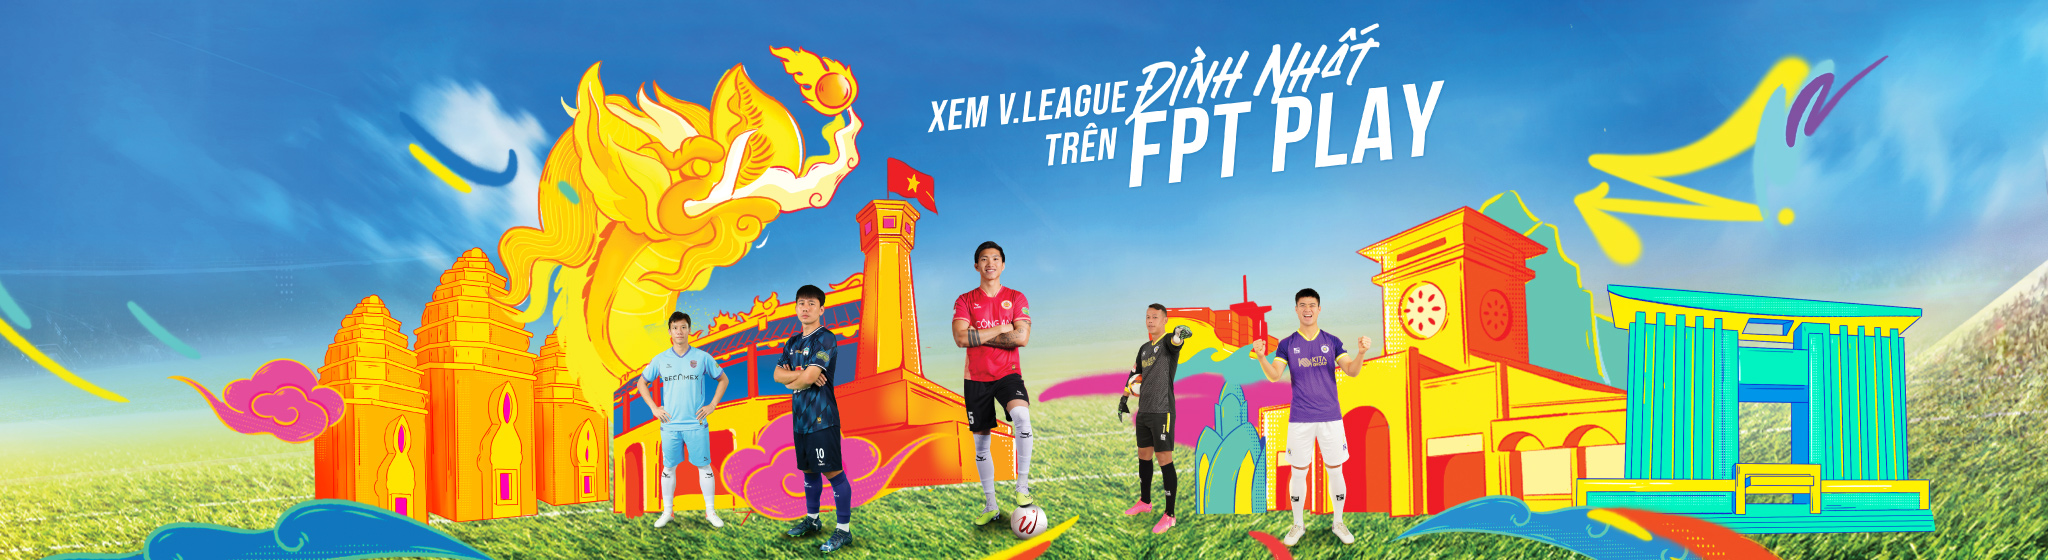 fpt_v.league banner